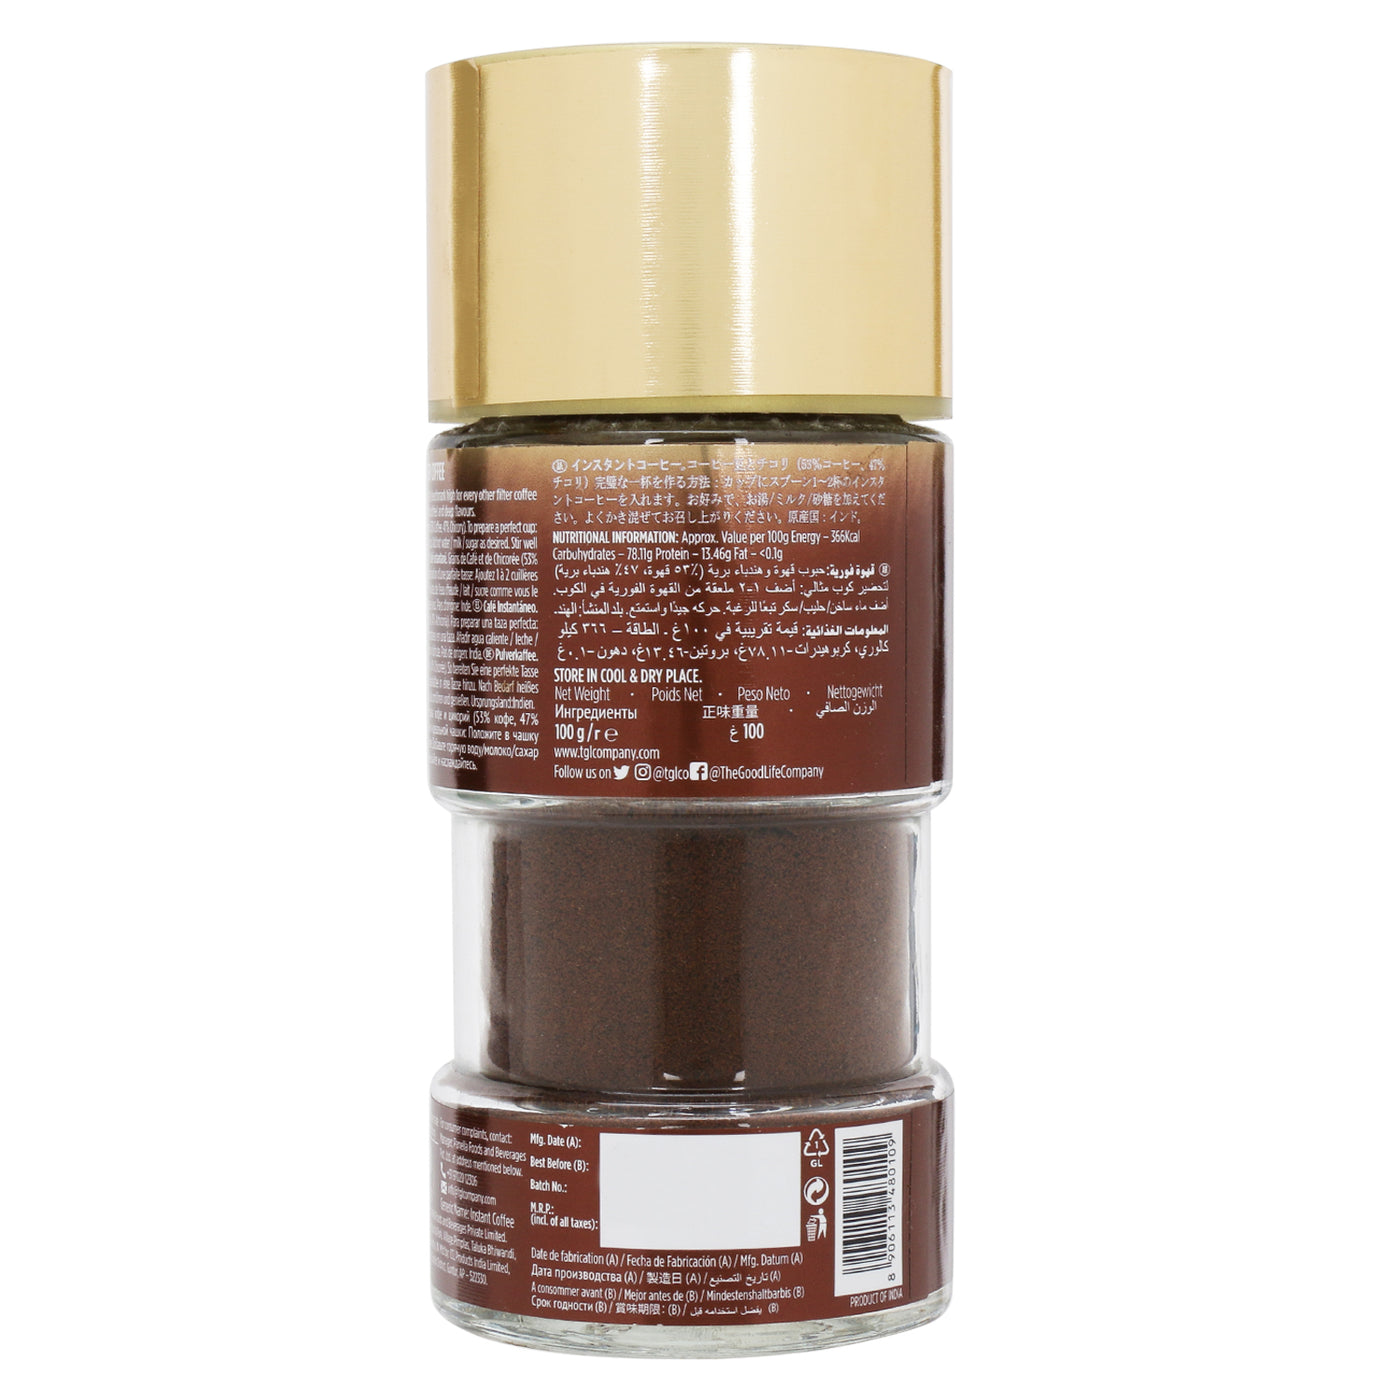 Signature Filter Coffee Powder - (Signature Filter Instant Coffee Powder)